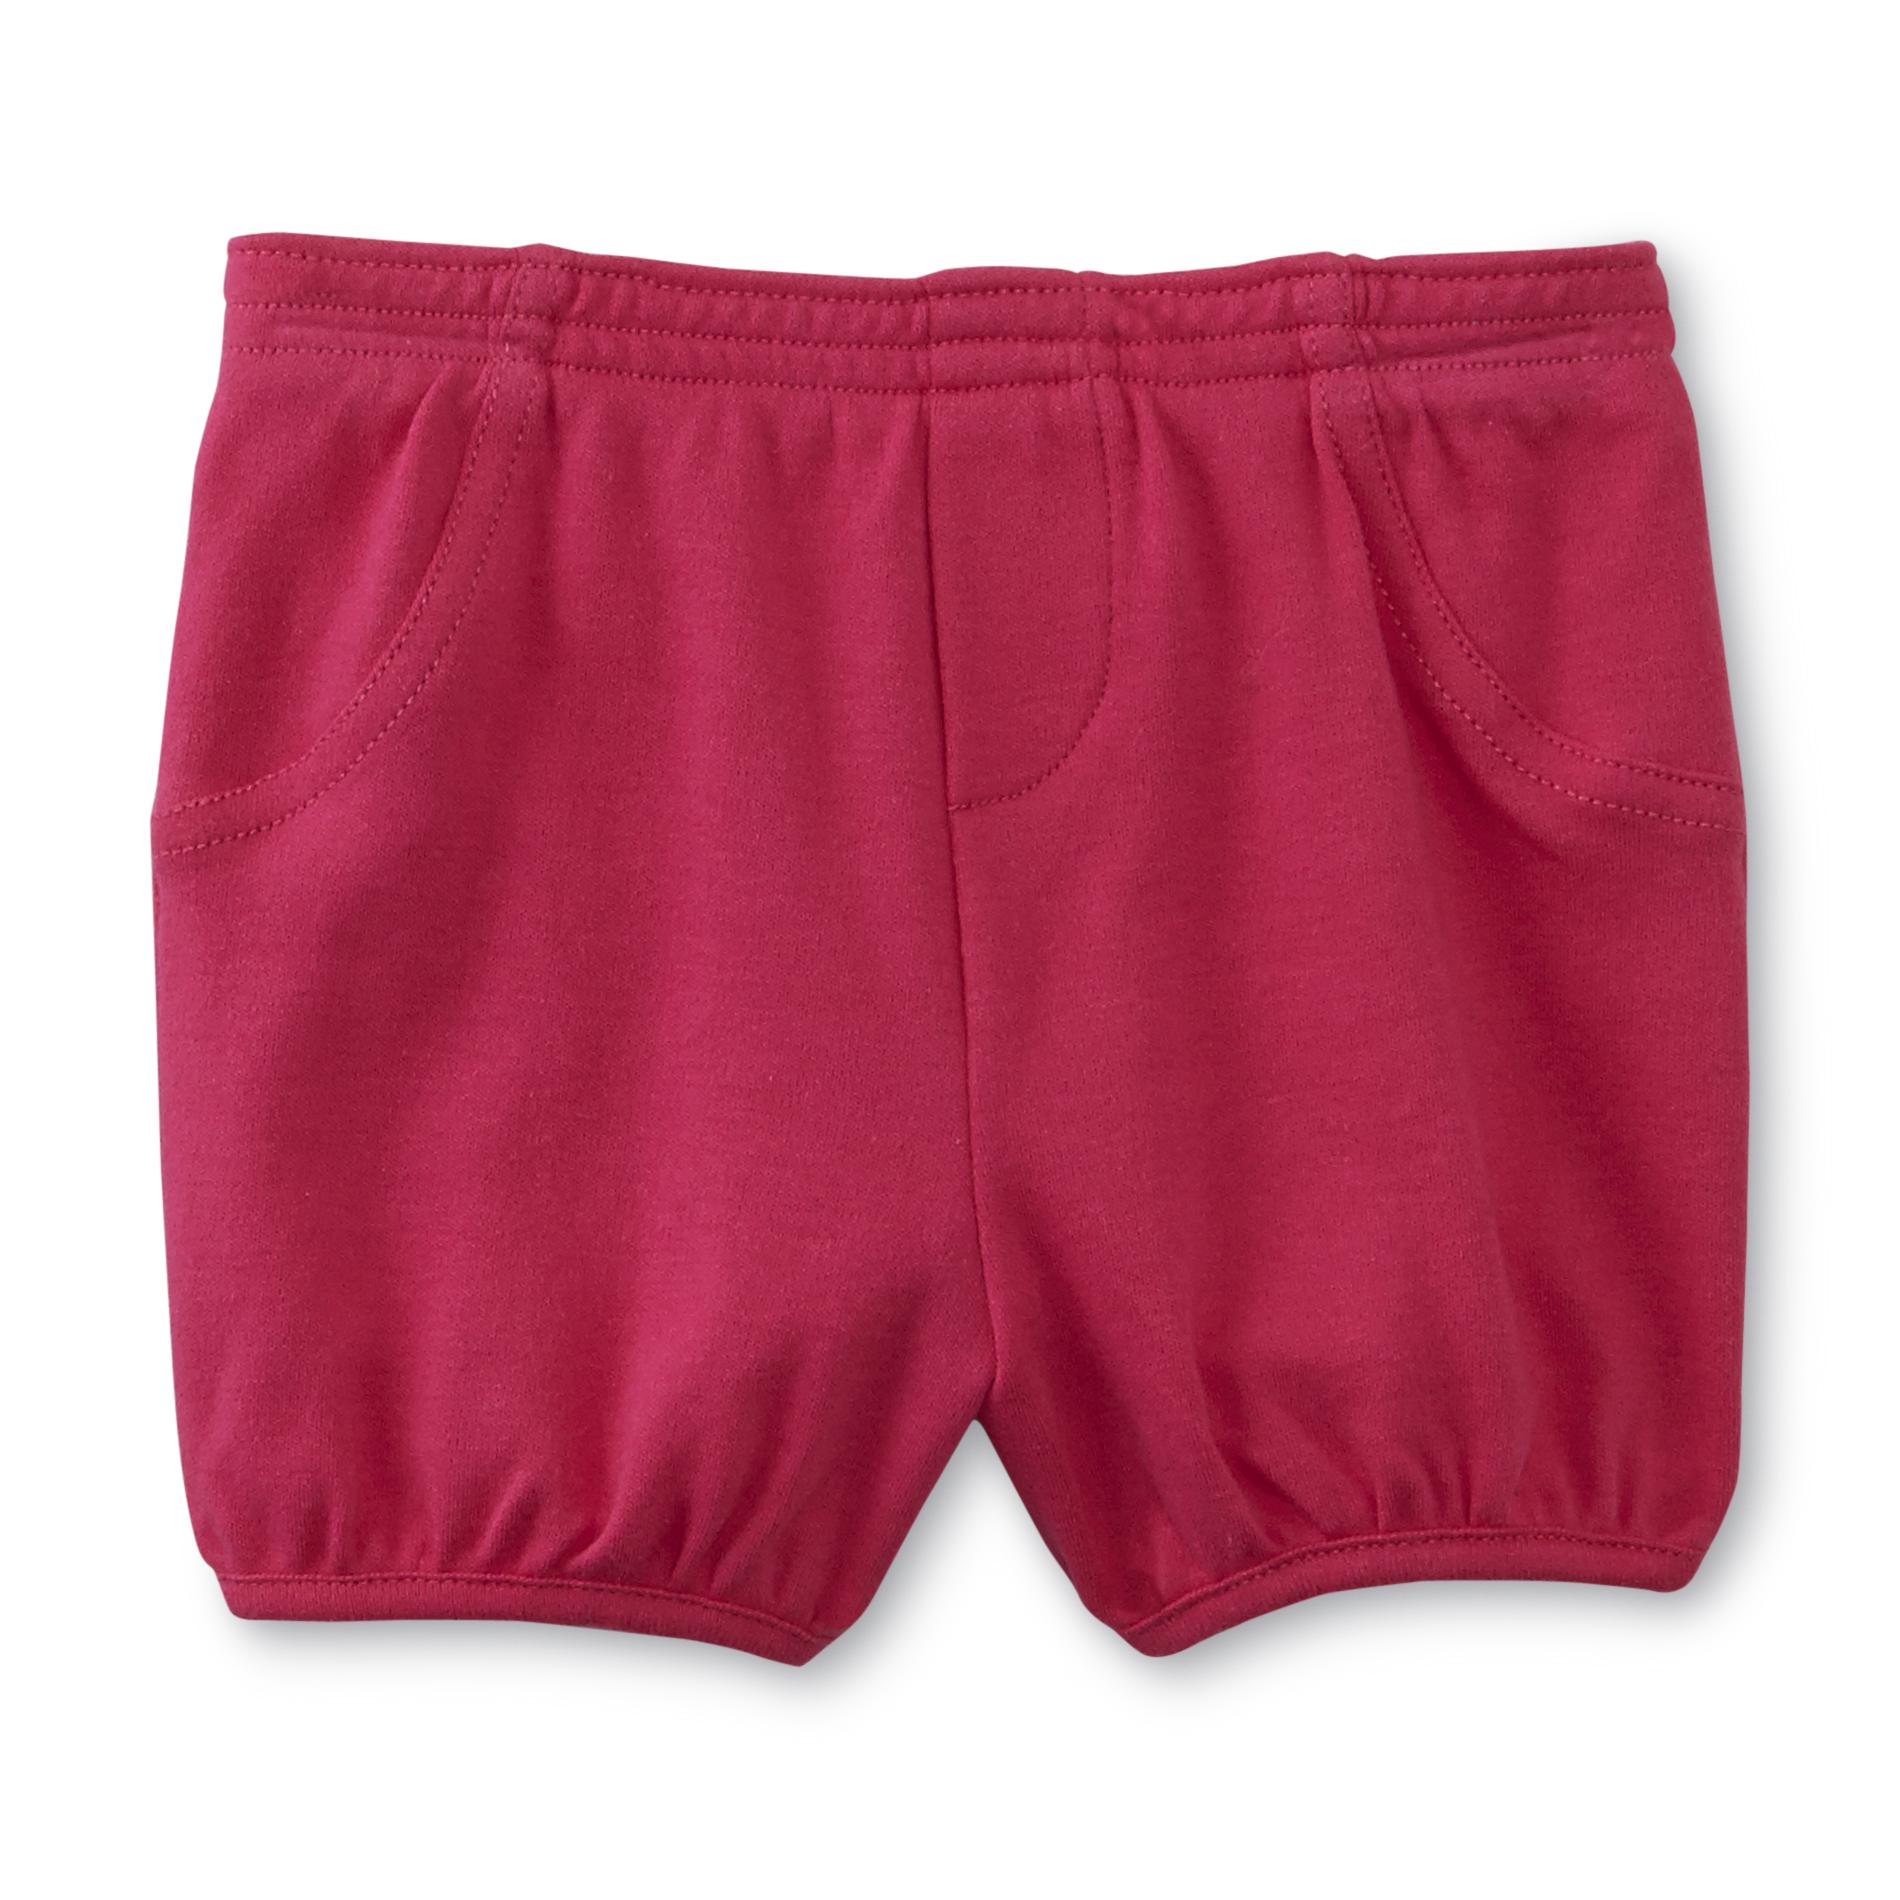 Small Wonders Newborn Girl's Knit Shorts